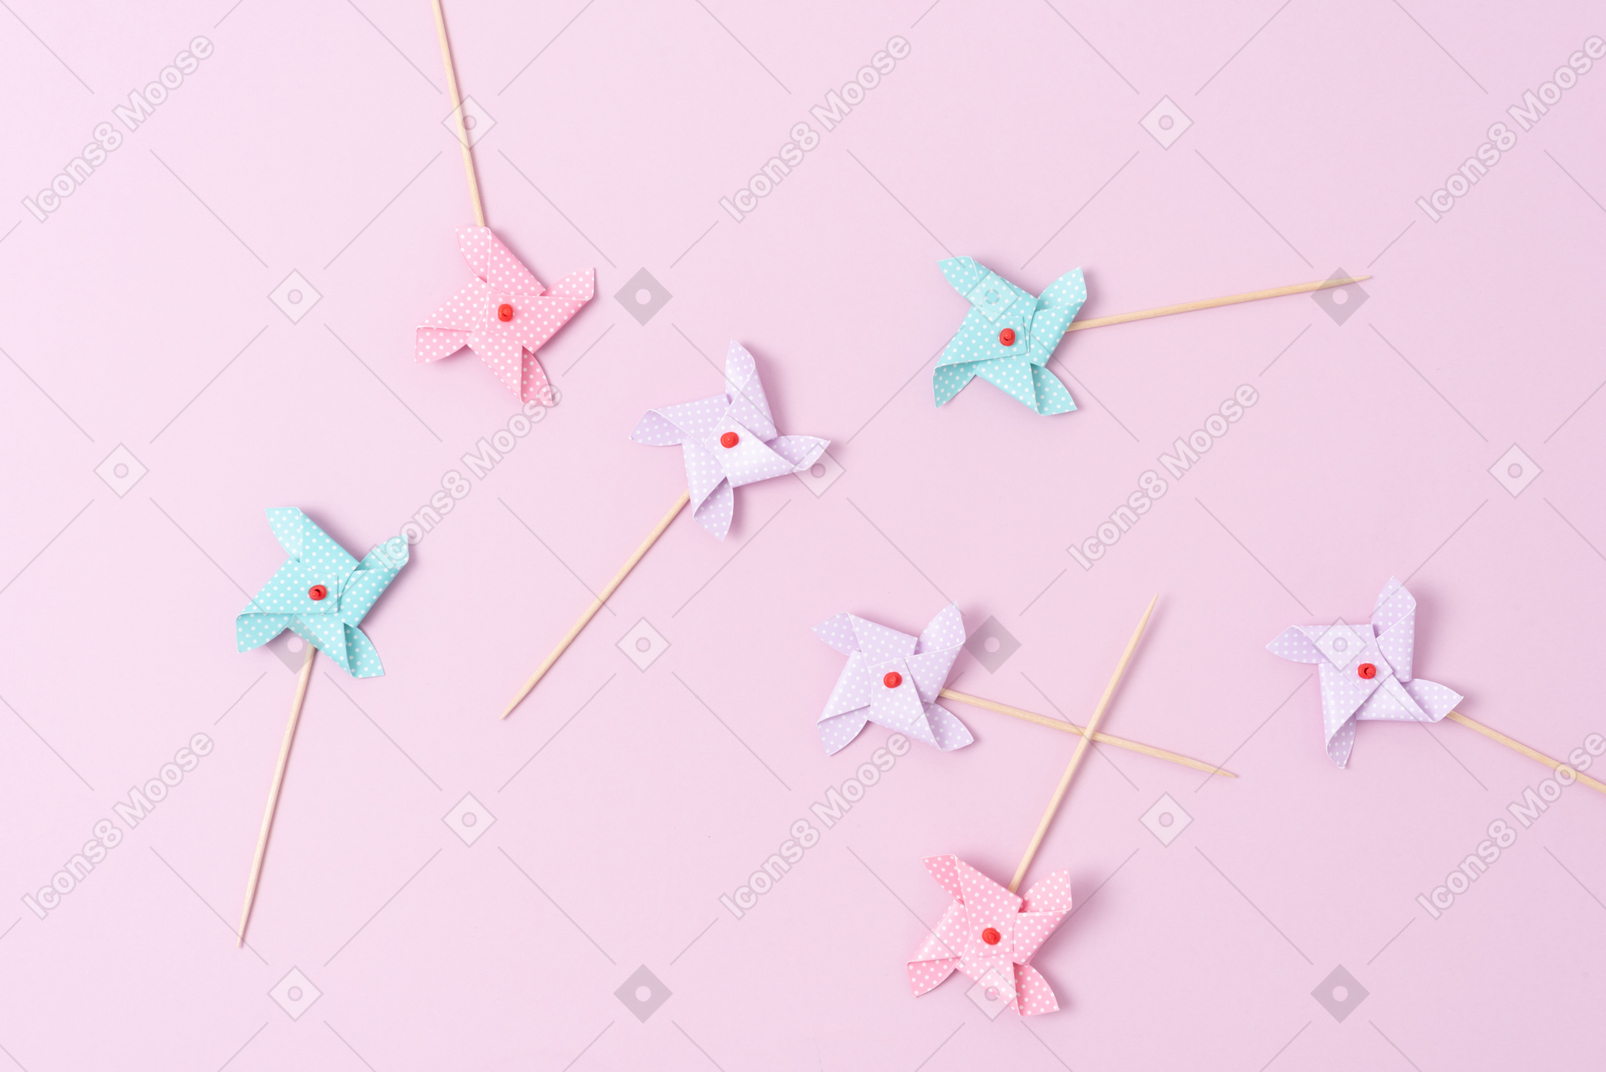 Pastel pinwheels on a pink background